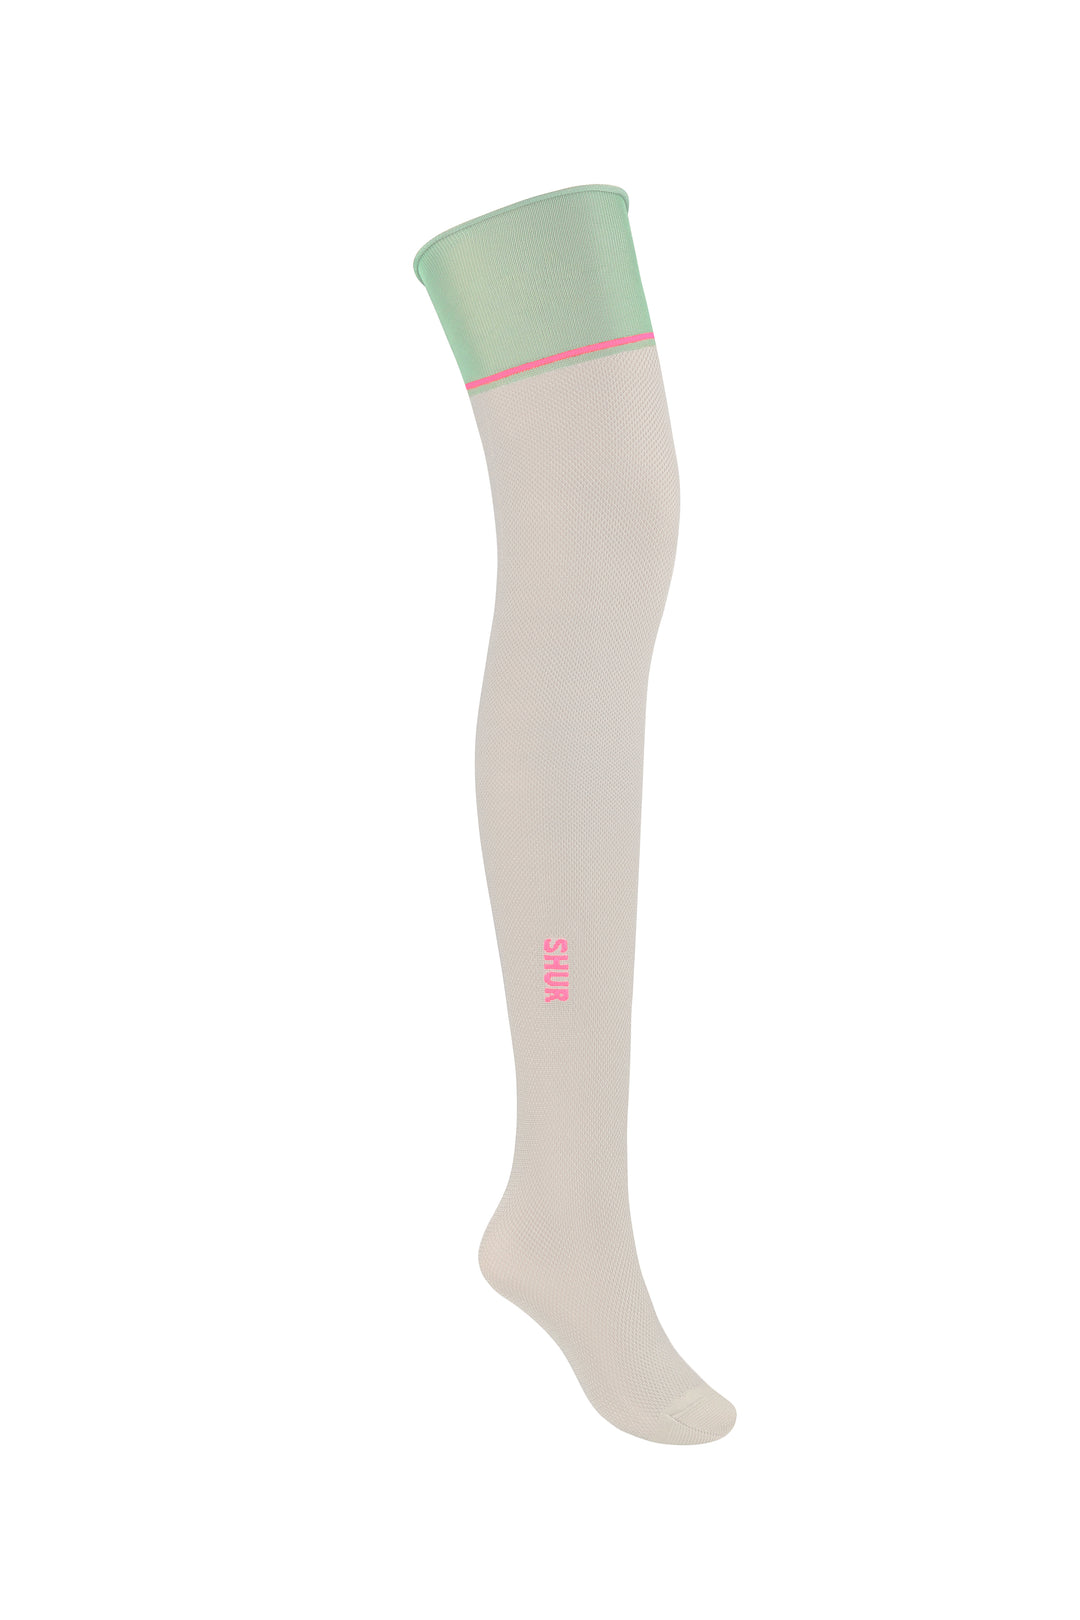 Fergie stockings